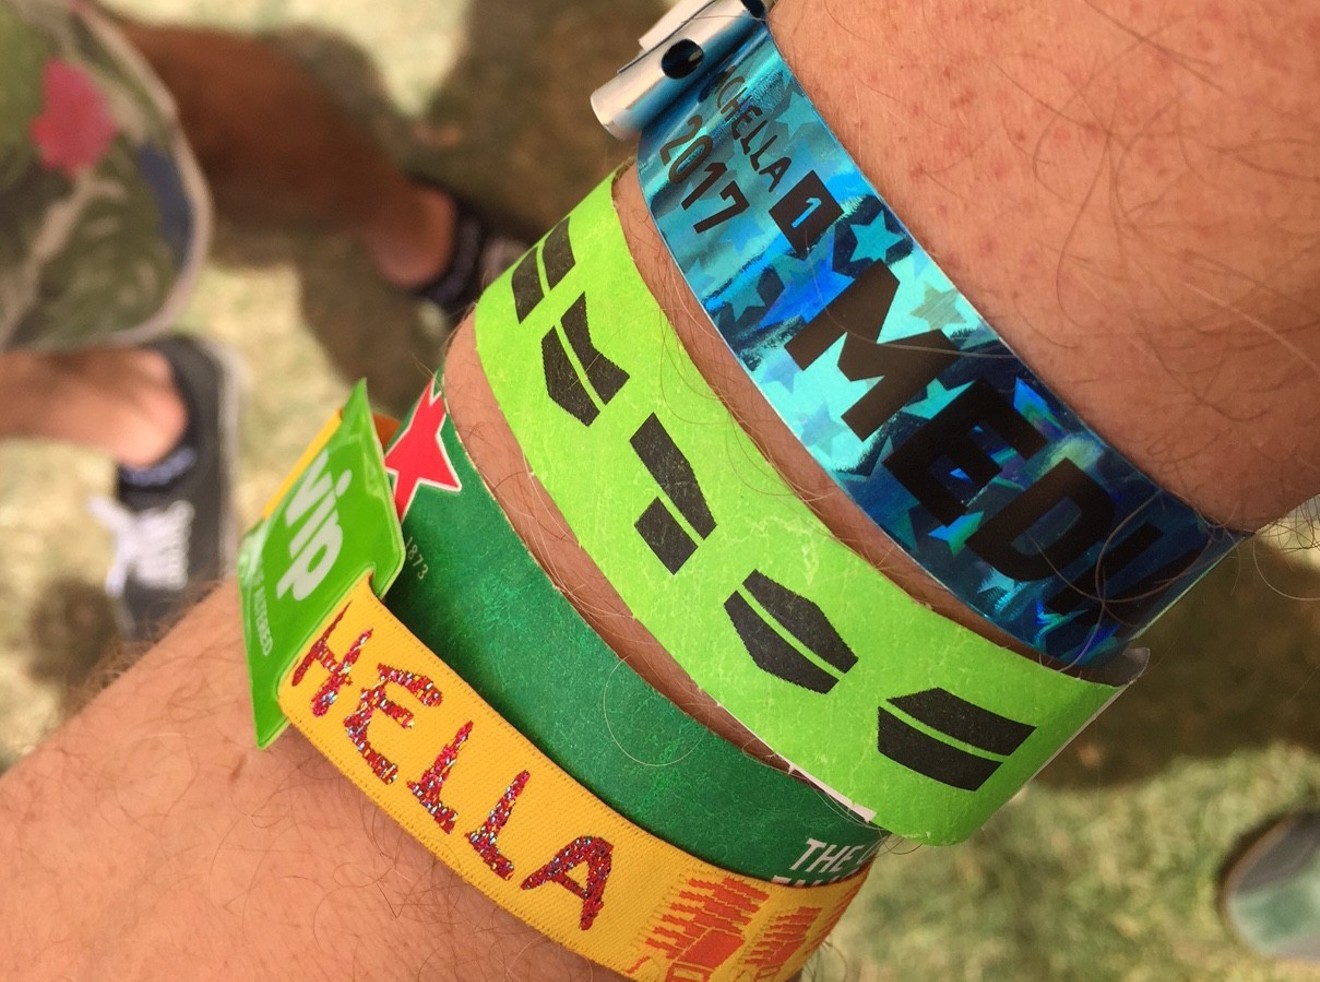 The author's Coachella 2017 wristband collection